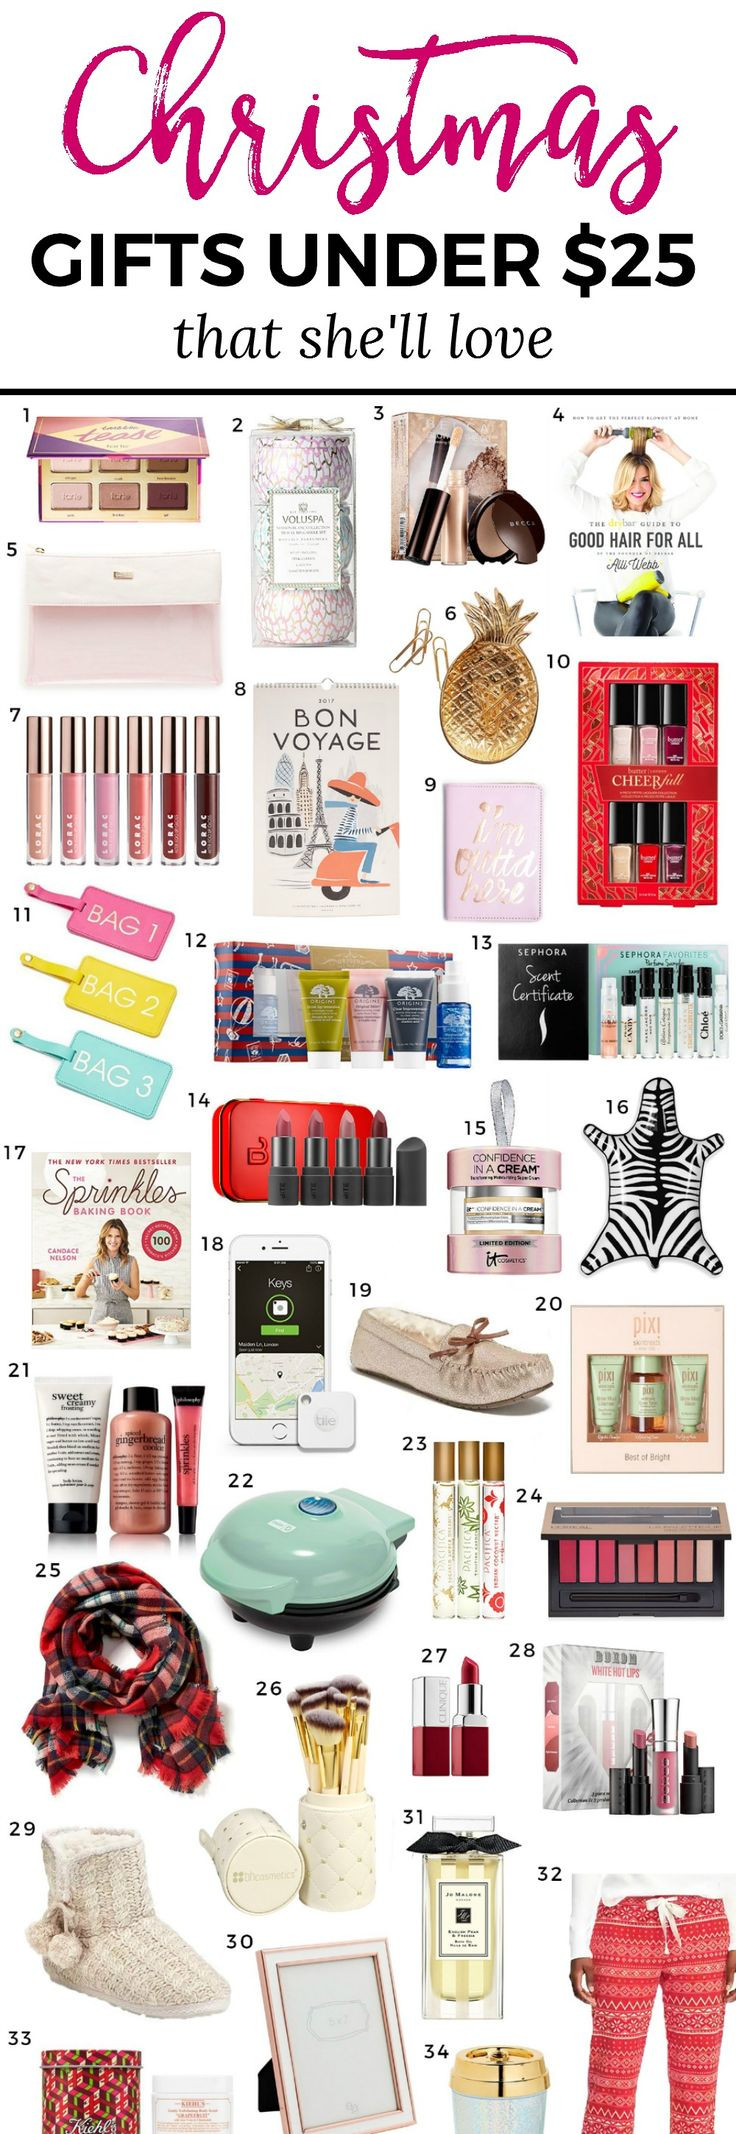 Ladies Christmas Gift Ideas
 Best 25 Christmas t ideas ideas on Pinterest